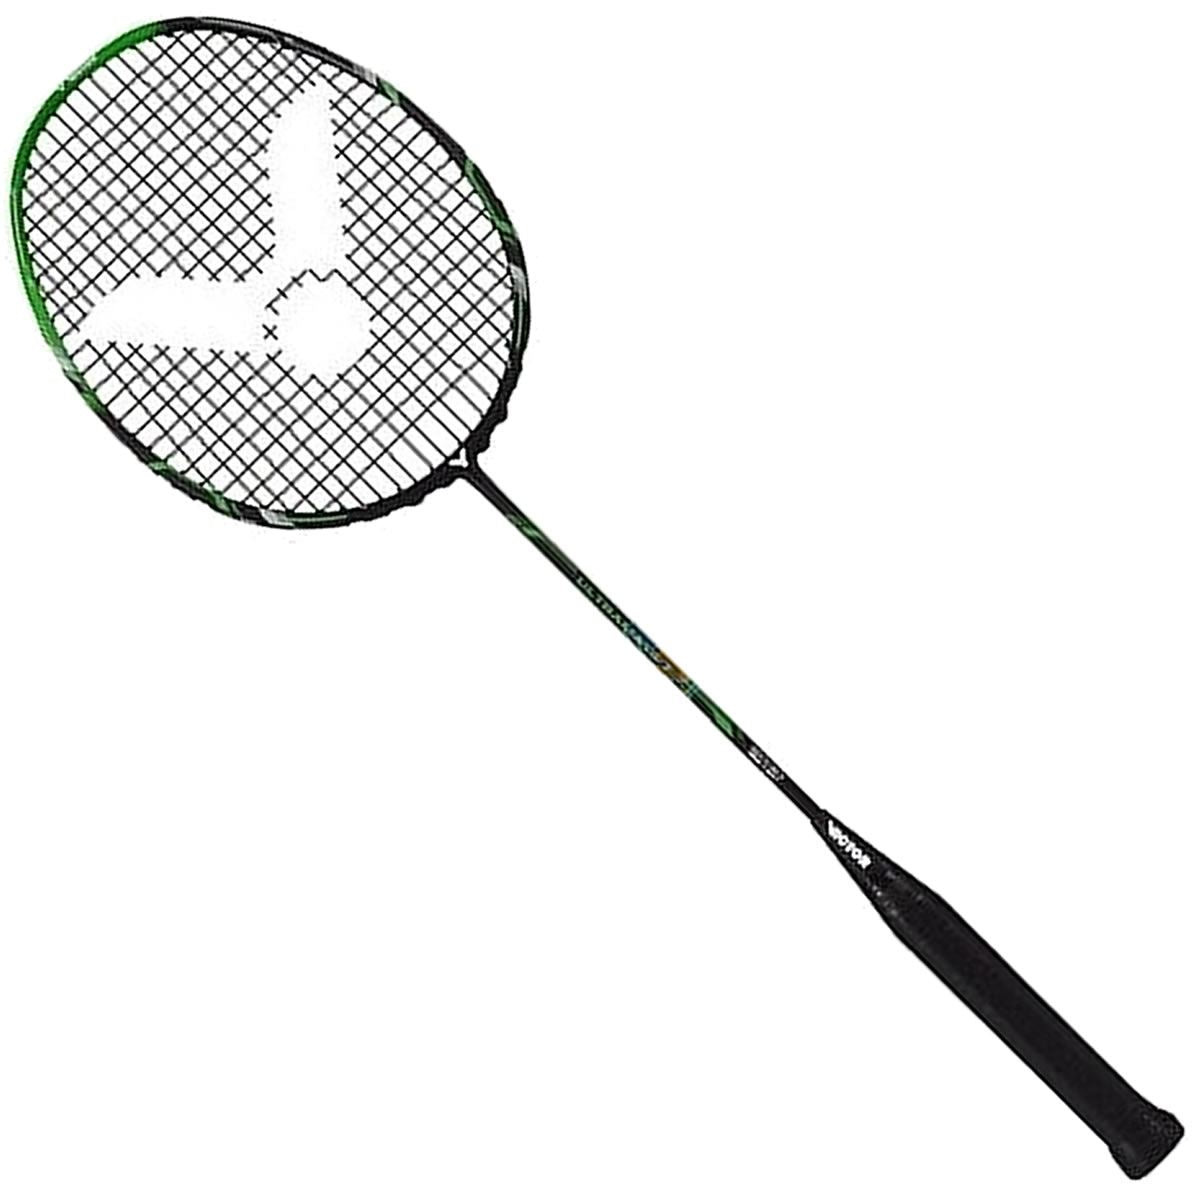 Victor Ultramate 7 Graphite Badminton Racket - Green Black